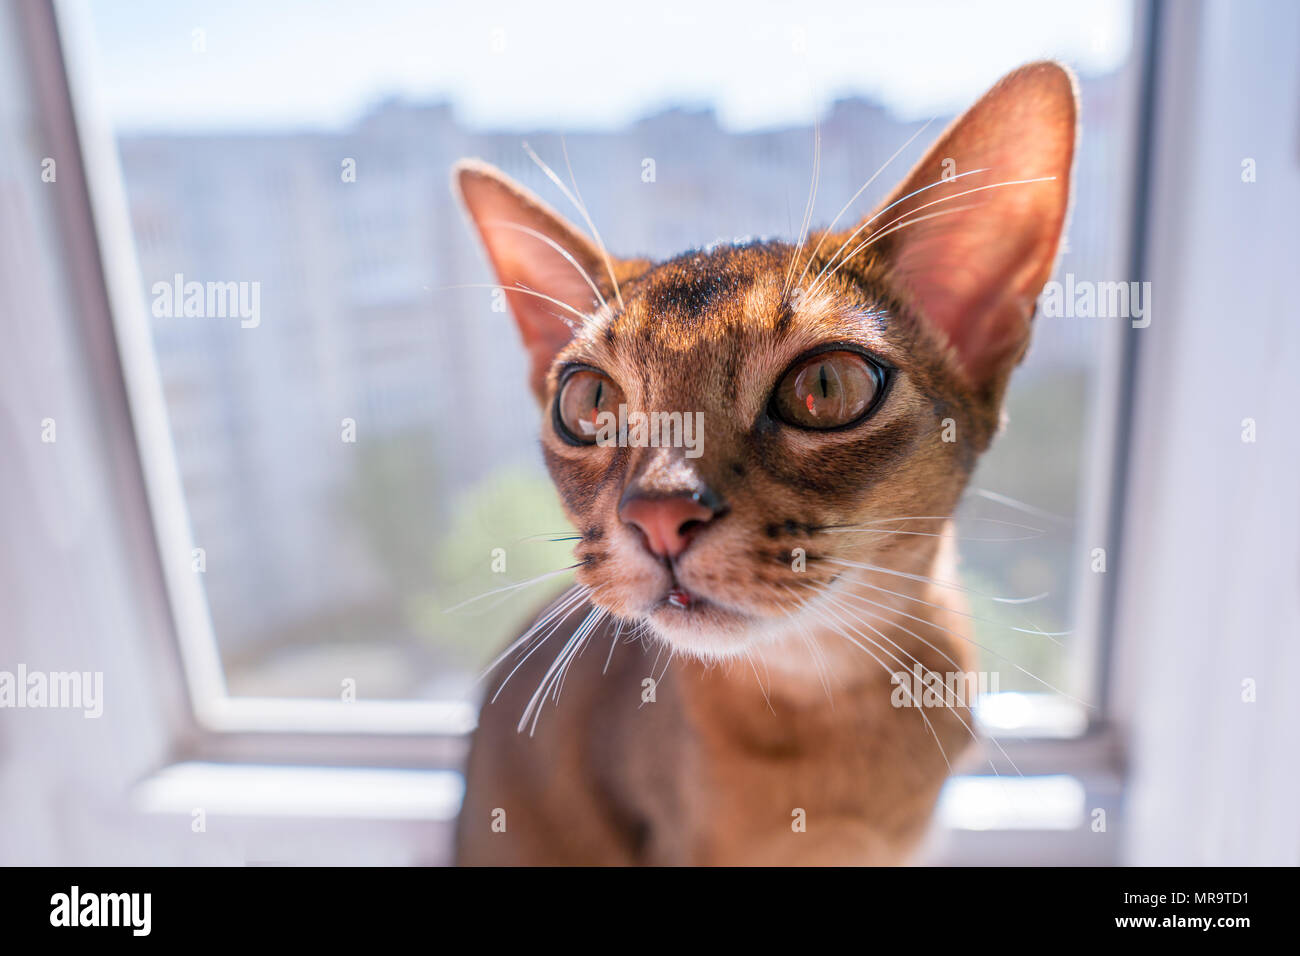 Acercamiento de abisinio gato o gatito sentado en la ventana Foto de stock